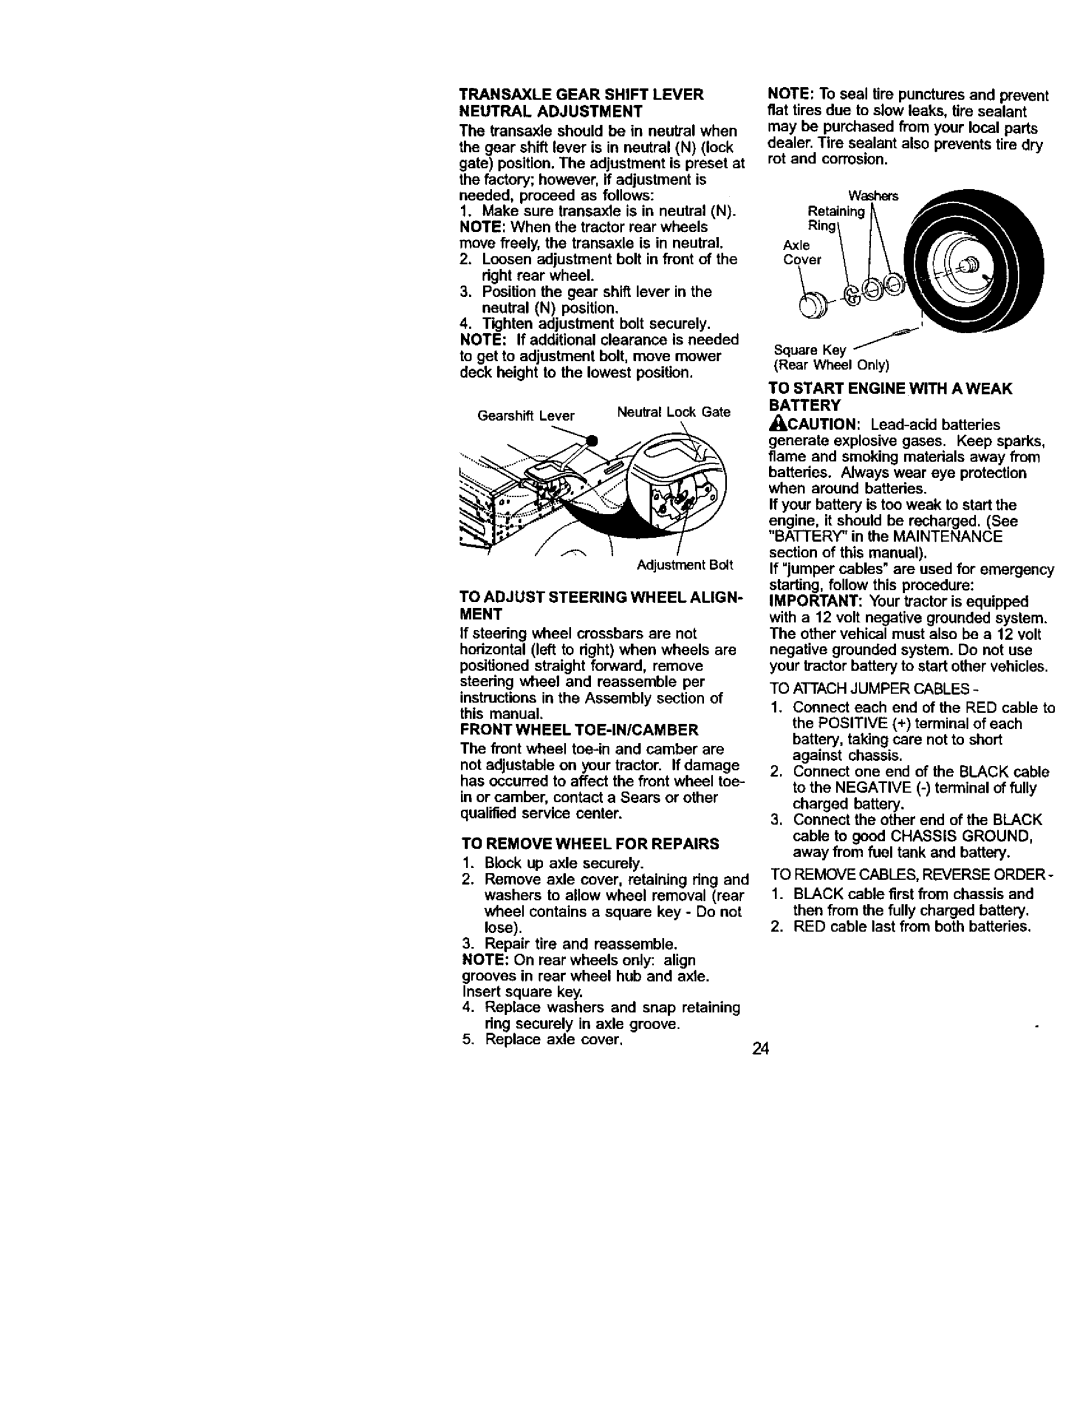 Craftsman 917.272054 owner manual Transaxle Gear Shift Lever Neutral Adjustment 